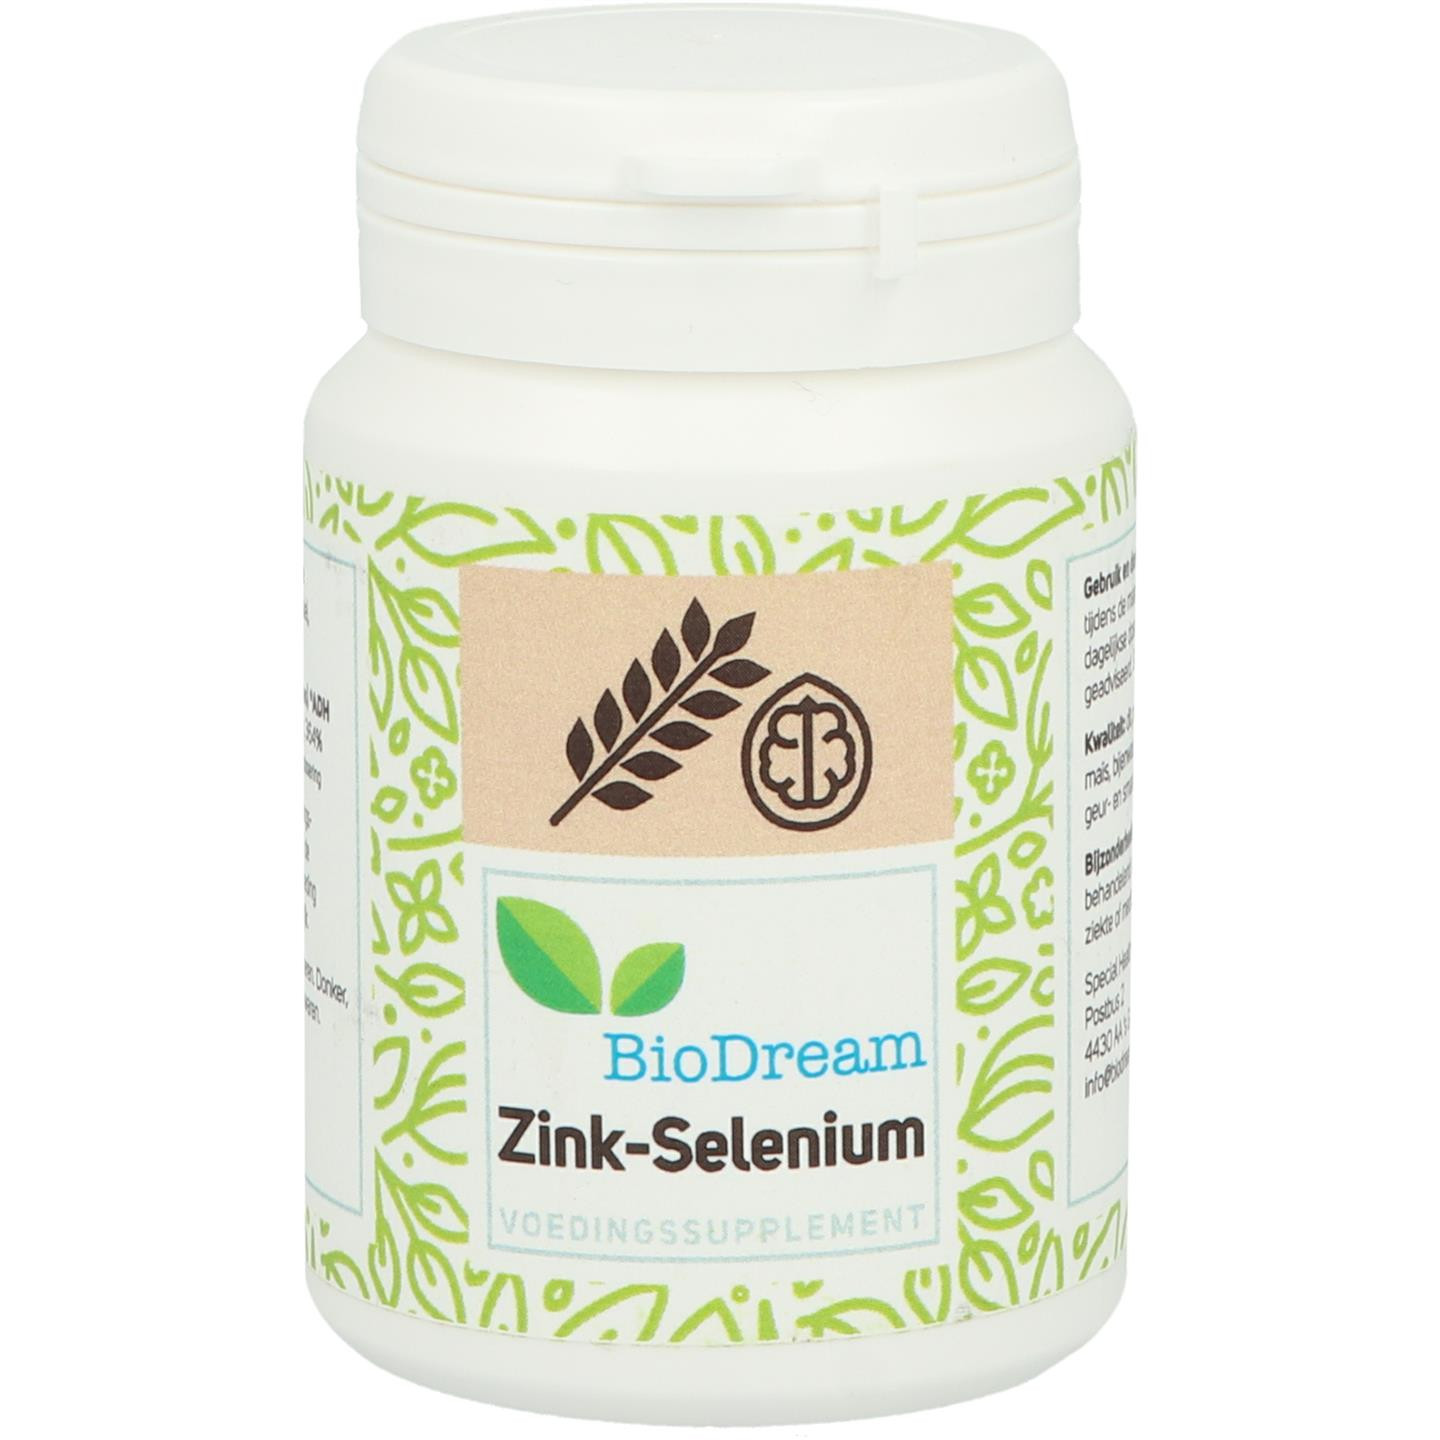 Zink-Selenium